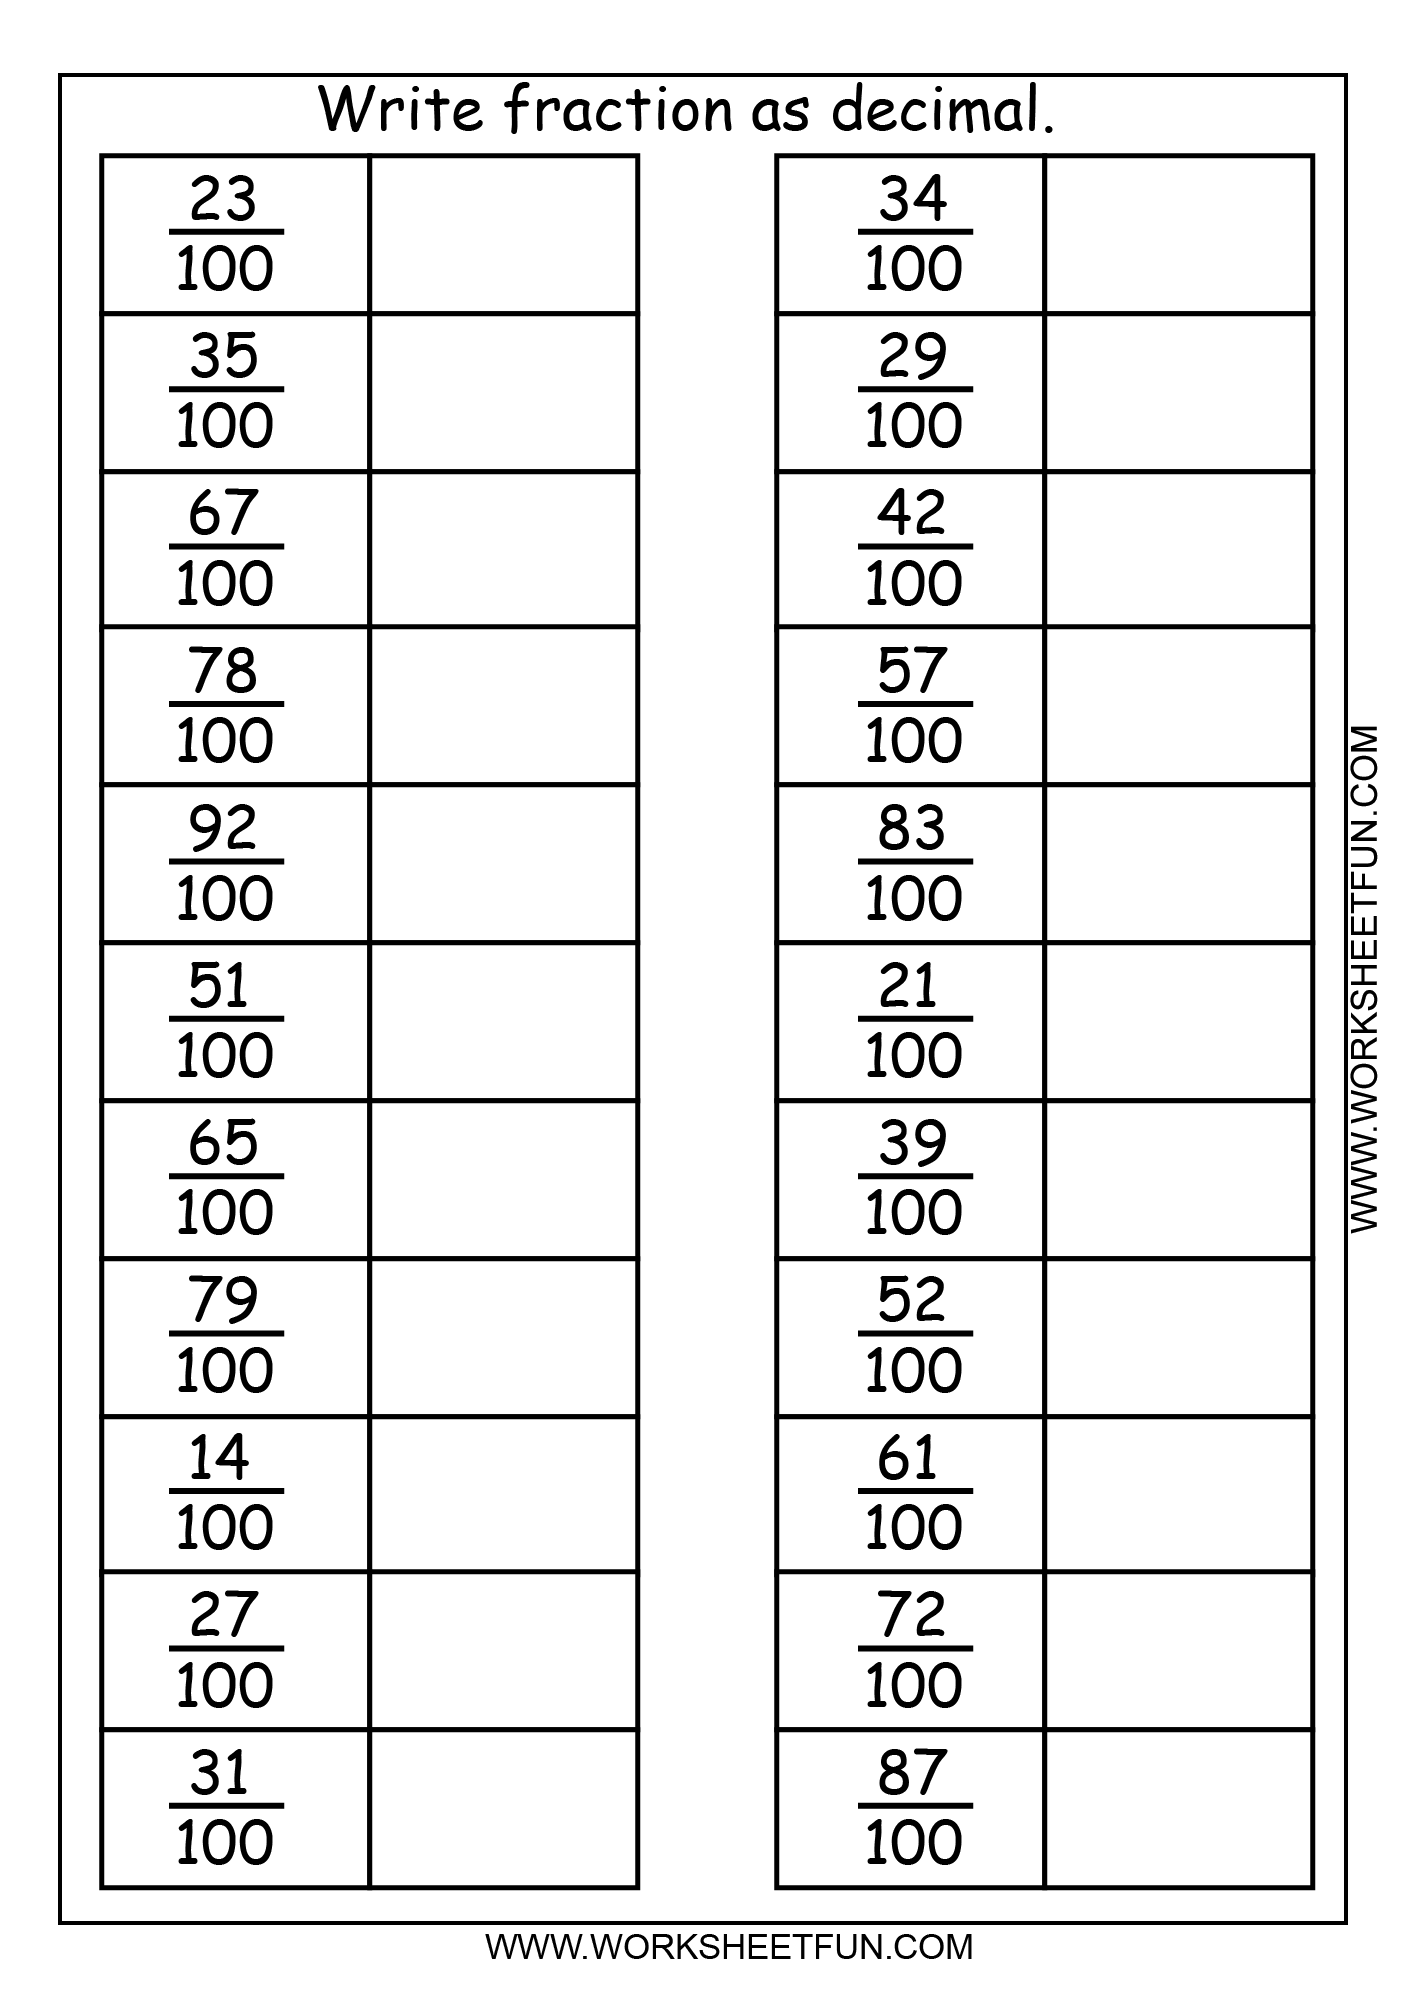 Write fraction as decimal – 3 Worksheets / FREE Printable Worksheets – Worksheetfun